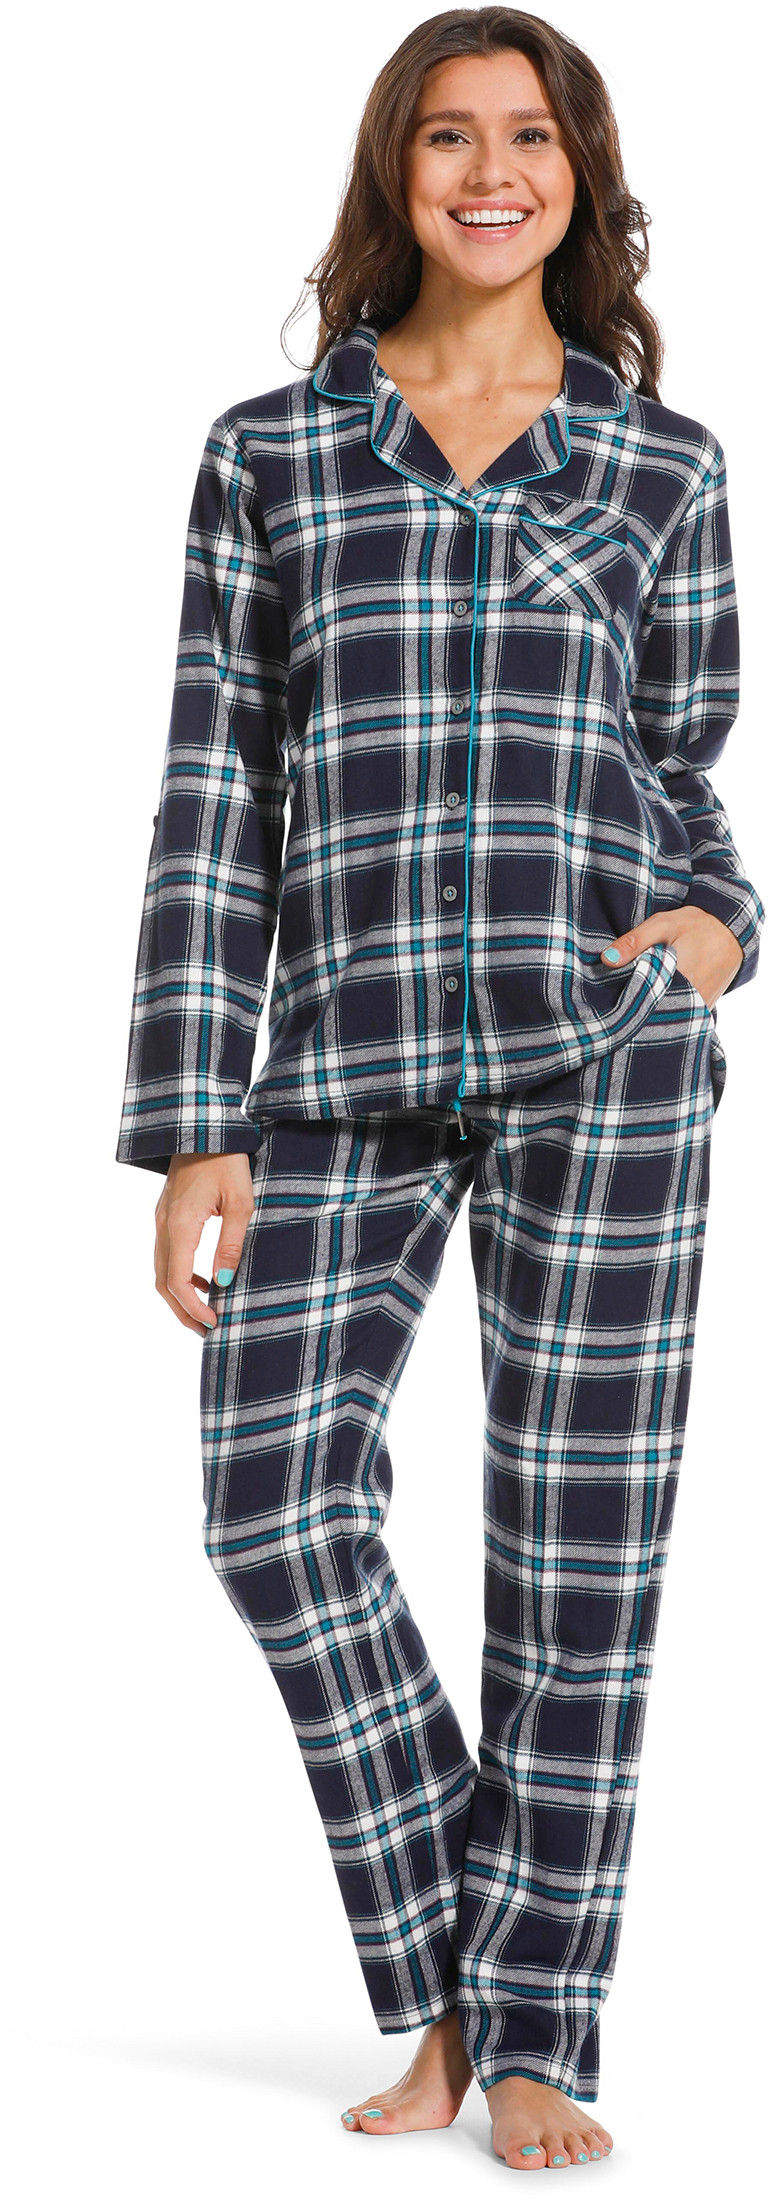 Rebelle dames pyjama flanel 21222-408-6-42